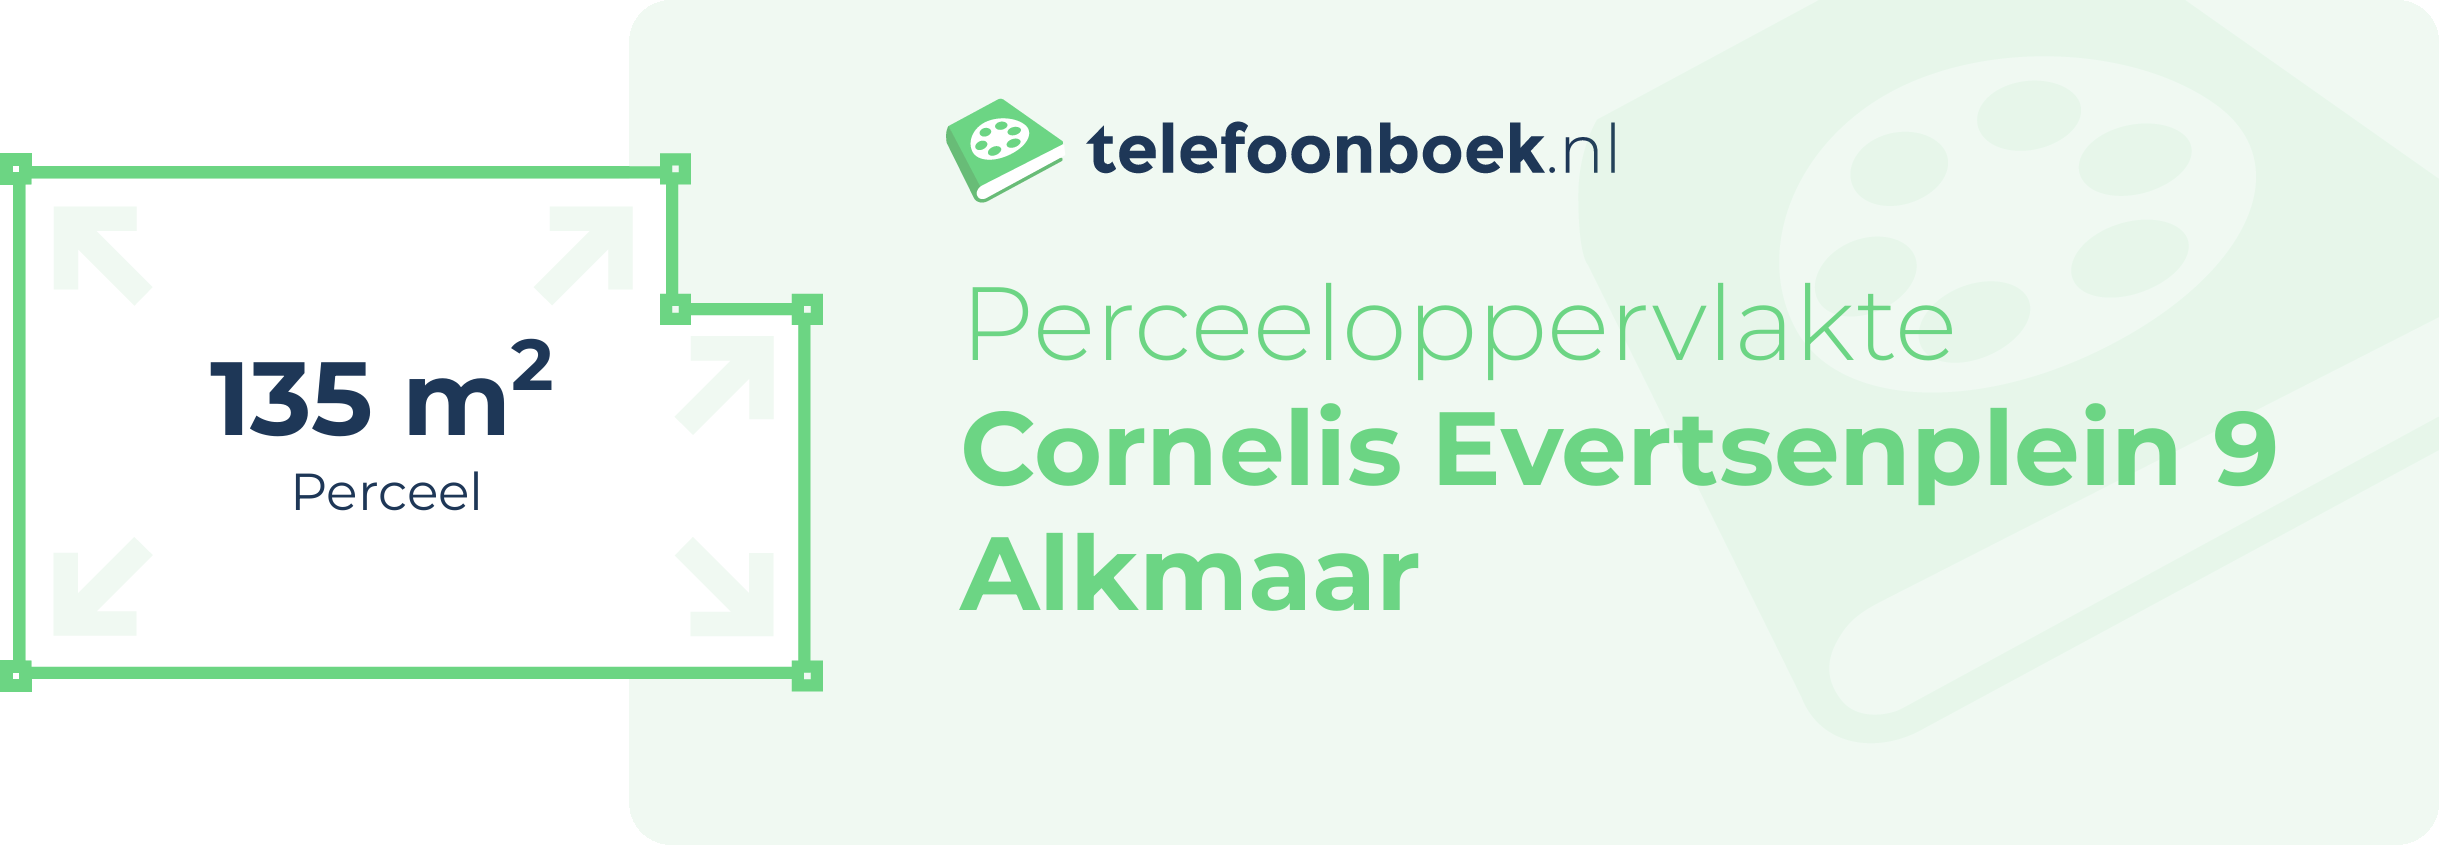 Perceeloppervlakte Cornelis Evertsenplein 9 Alkmaar